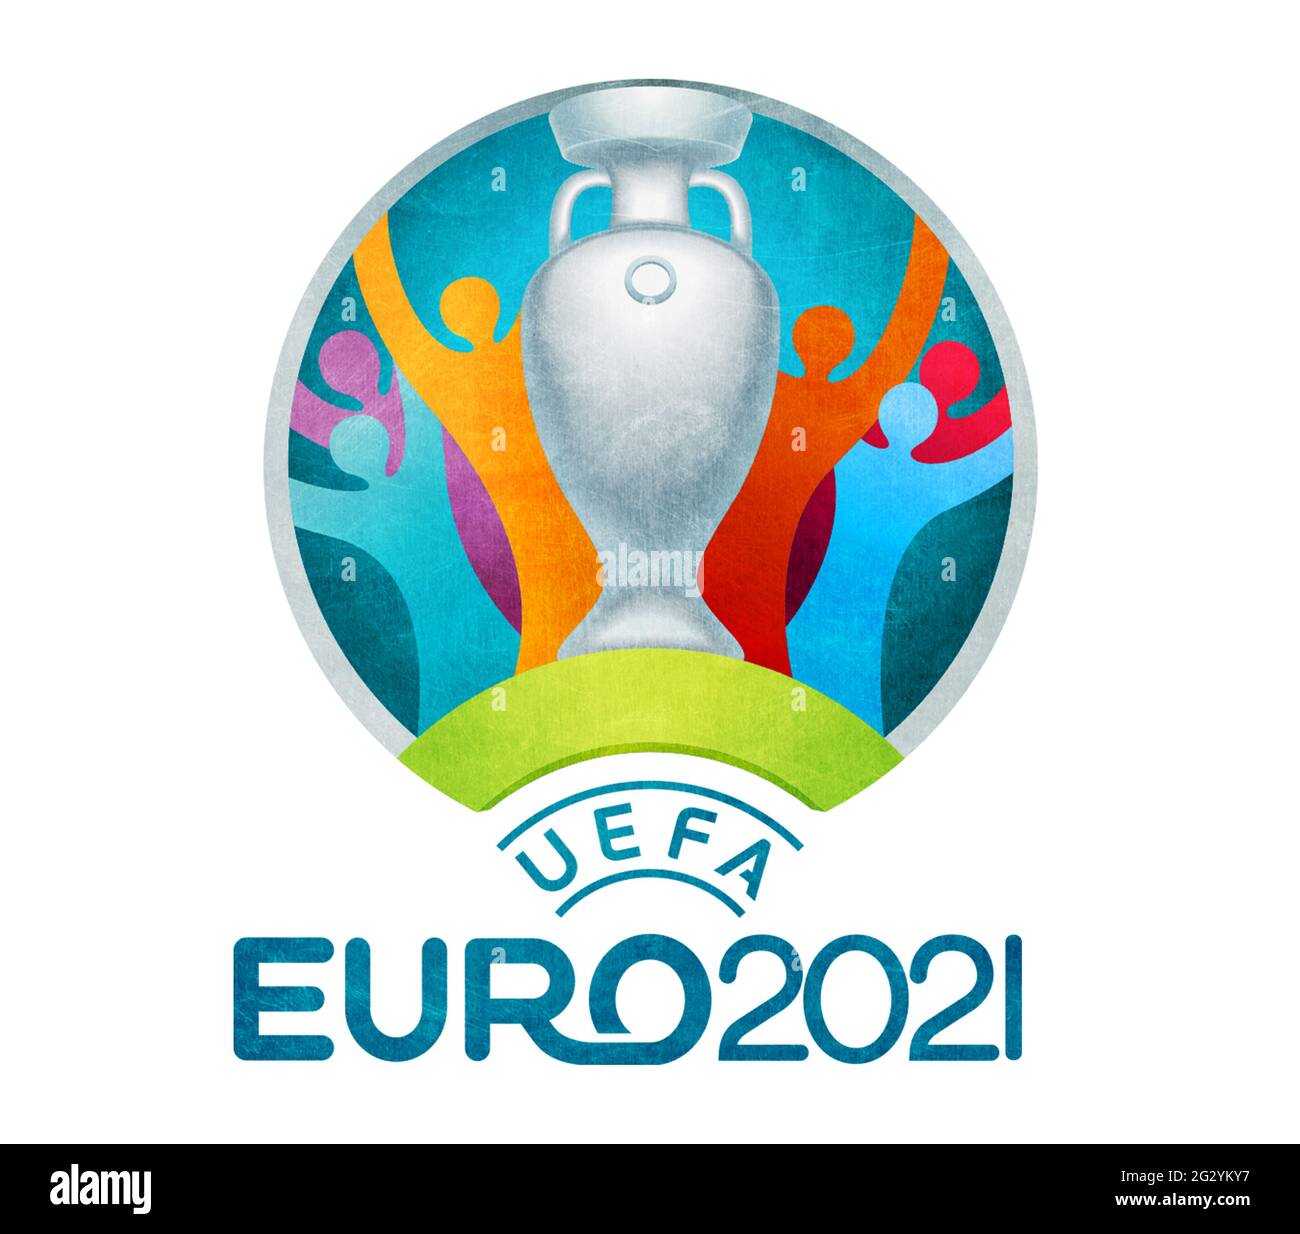 Logotipo del torneo UEFA EURO 2021 Foto de stock